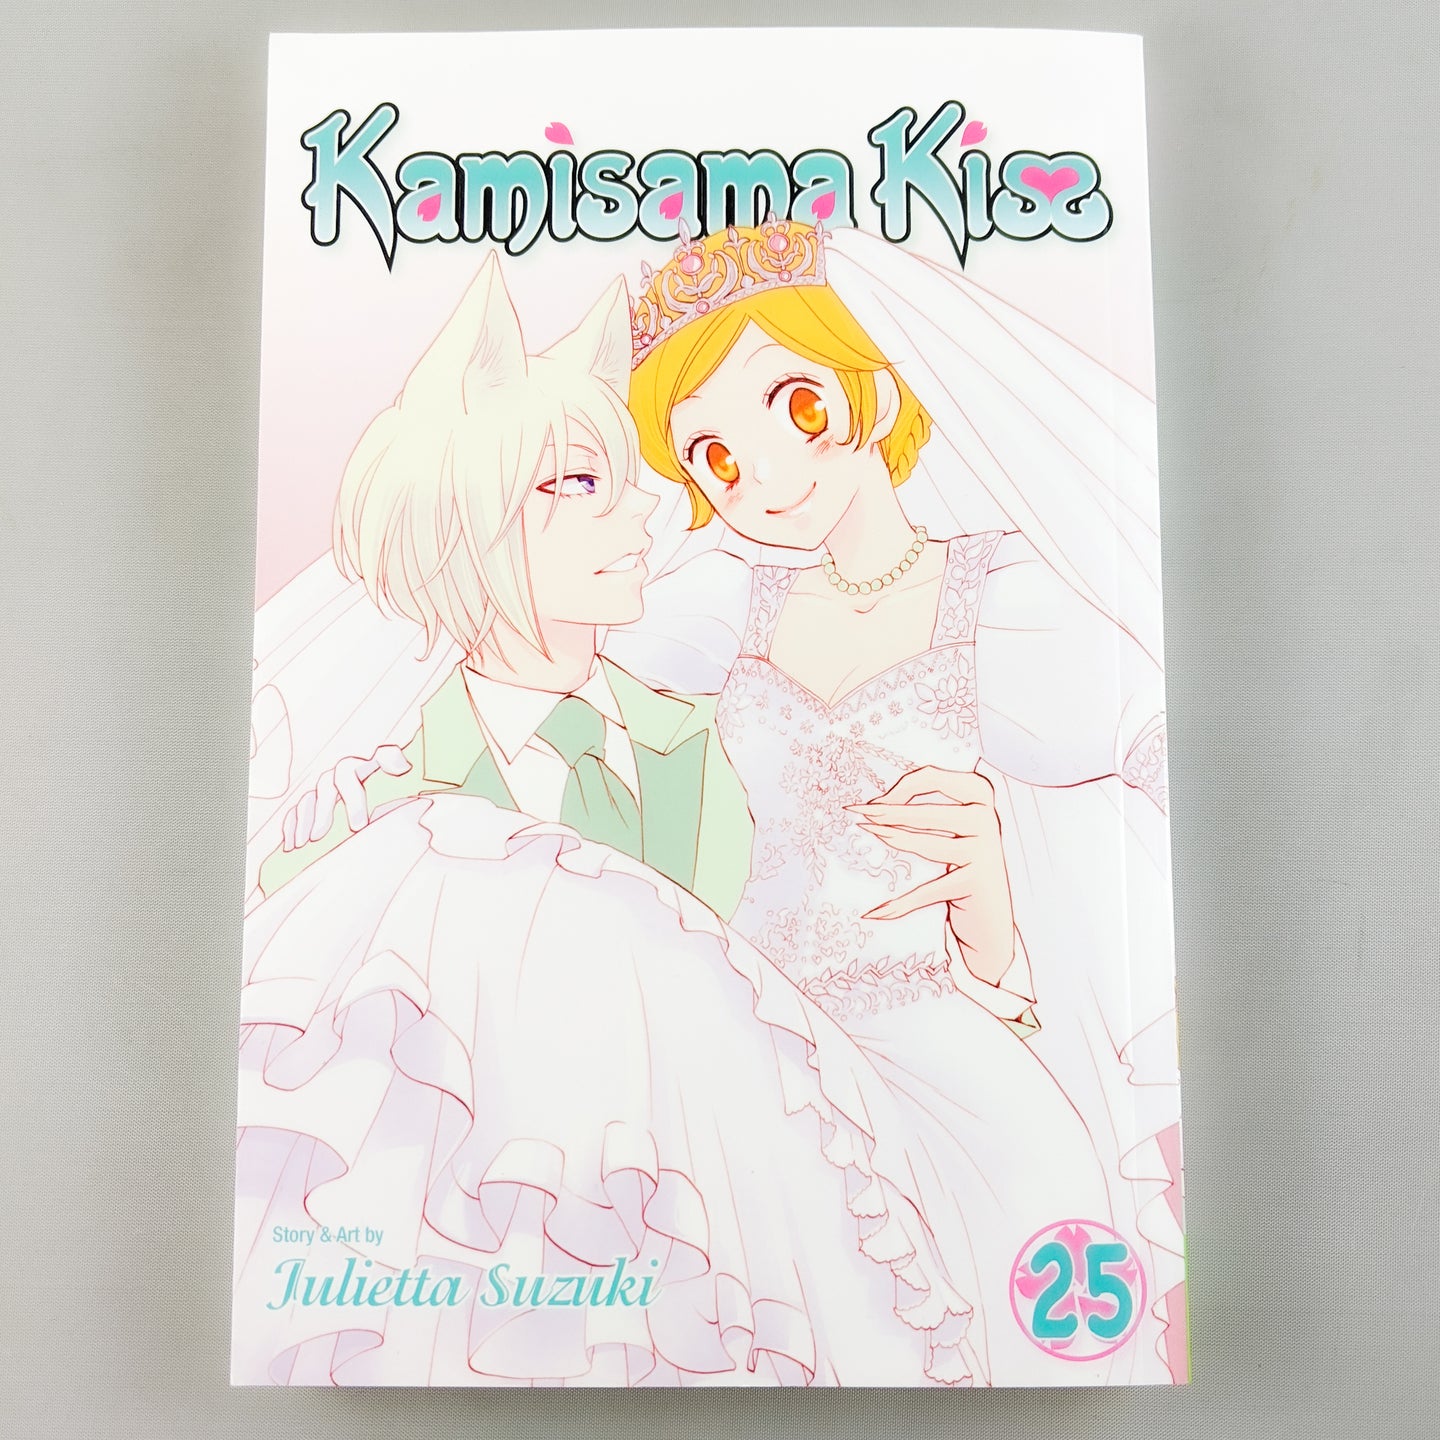 Kamisama Kiss Volume 25, Final Volume. Manga by Julietta Suzuki.